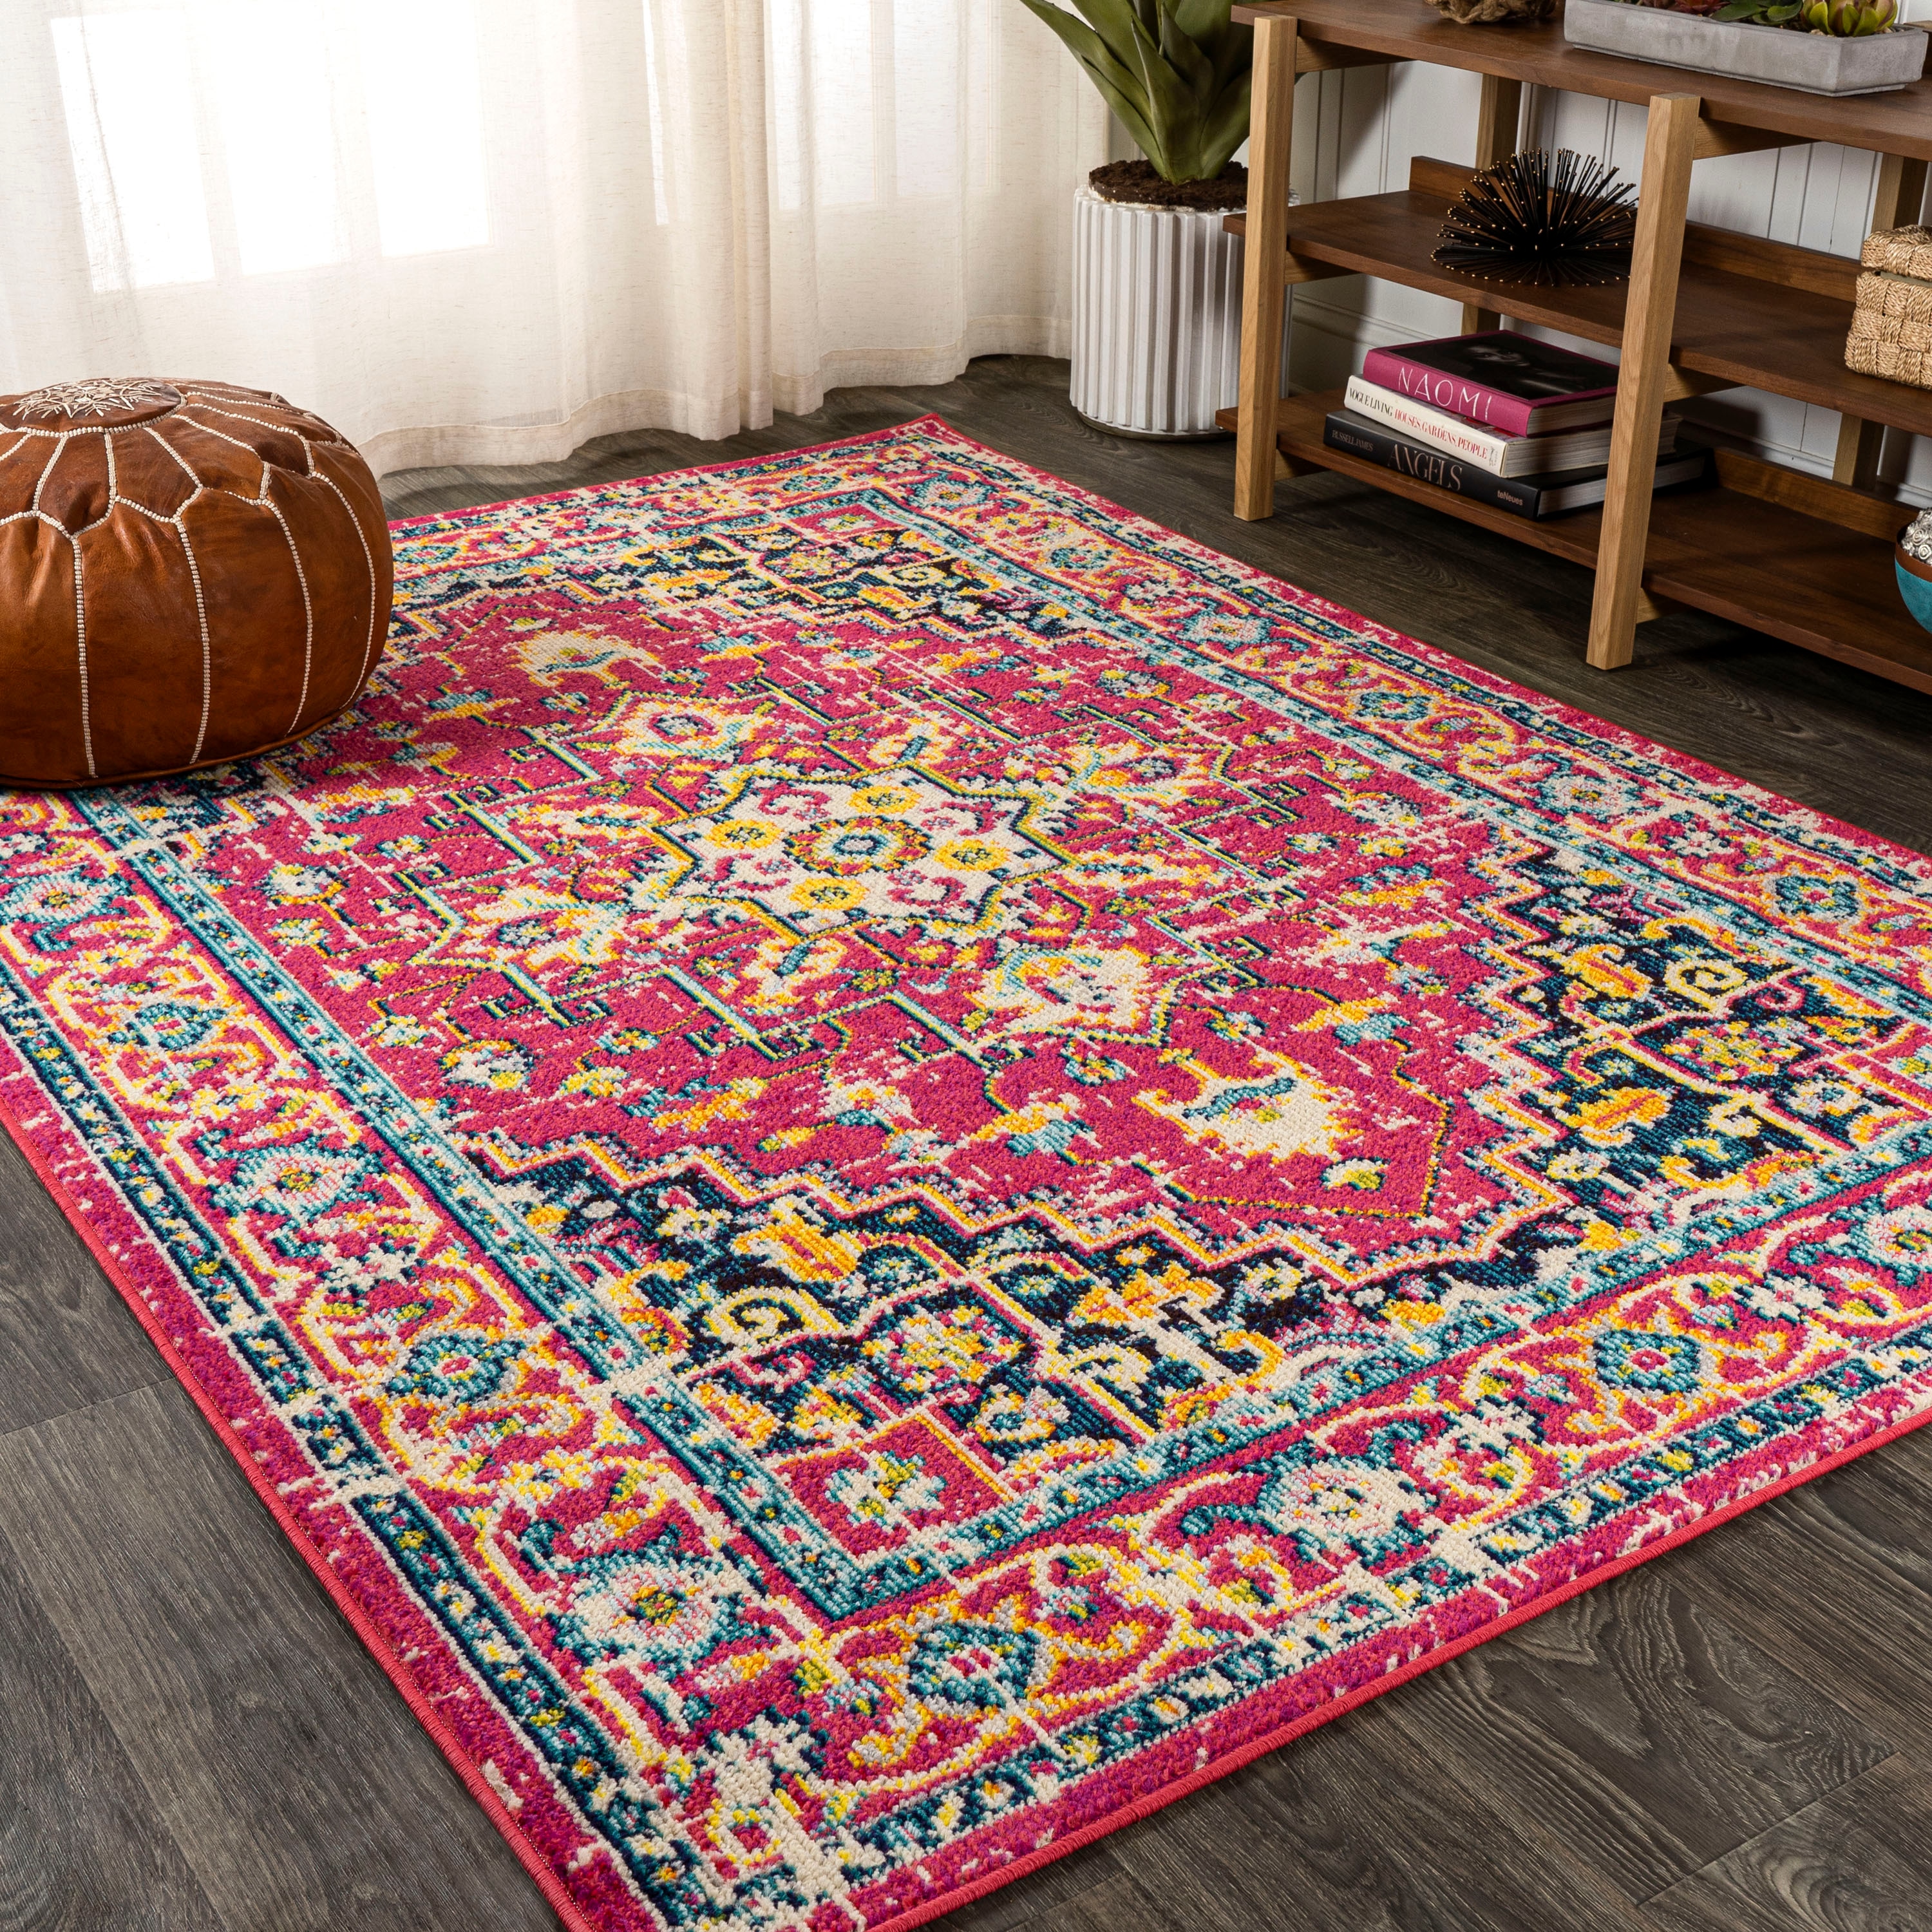 Green Bay Packers Area Rugs Non-slip Fluffy Floor Mat Living Room Flannel Carpet 